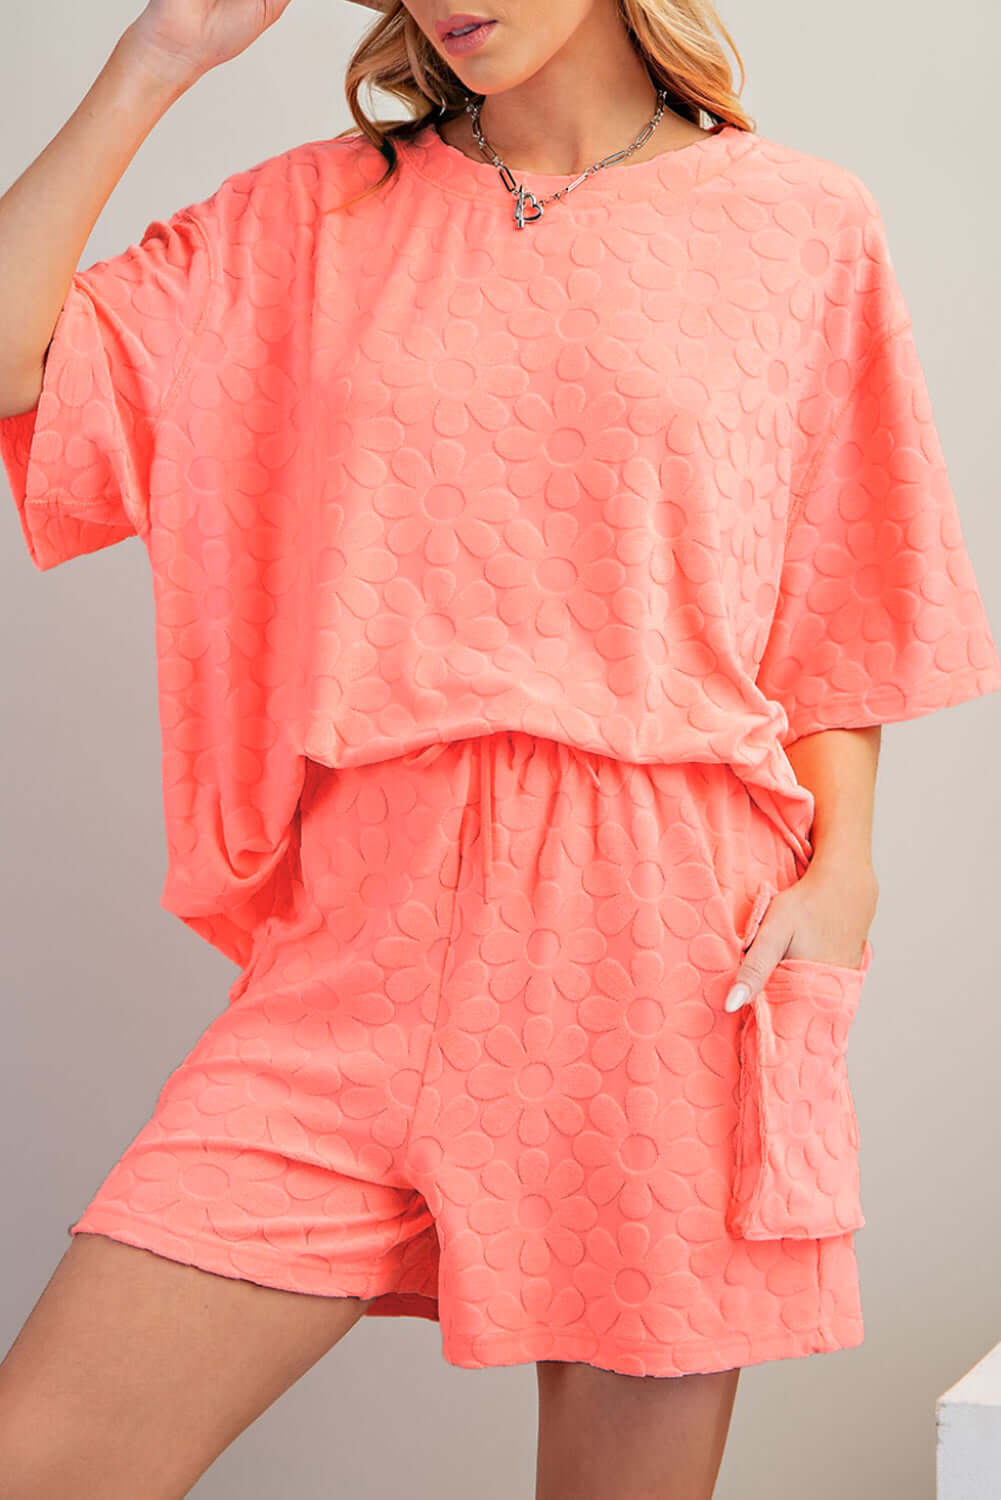 Grapefruit Orange 95%Polyester+5%Elastane - Textured Flower Short Sleeve Top and Shorts Lounge Outfit Set - womens short set at TFC&H Co.